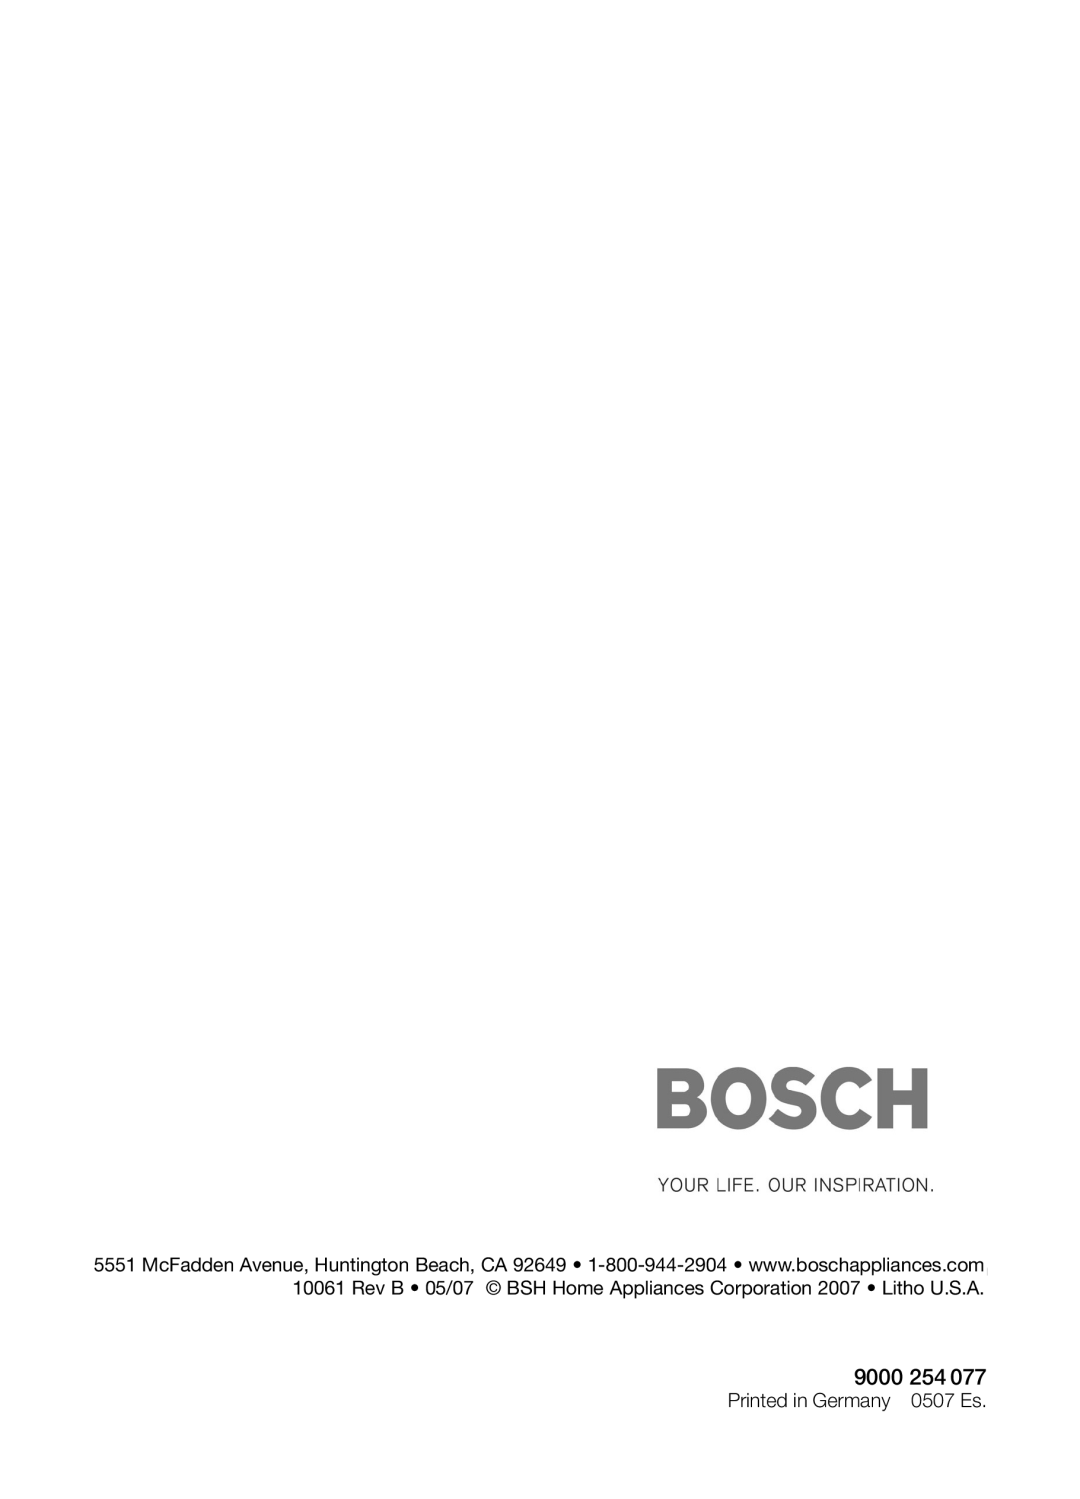 Bosch Appliances DIE 165 R Printed in Germany 0507 Es, McFadden Avenue, Huntington Beach, CA 92649, Rev B 05/07 BSH Home 